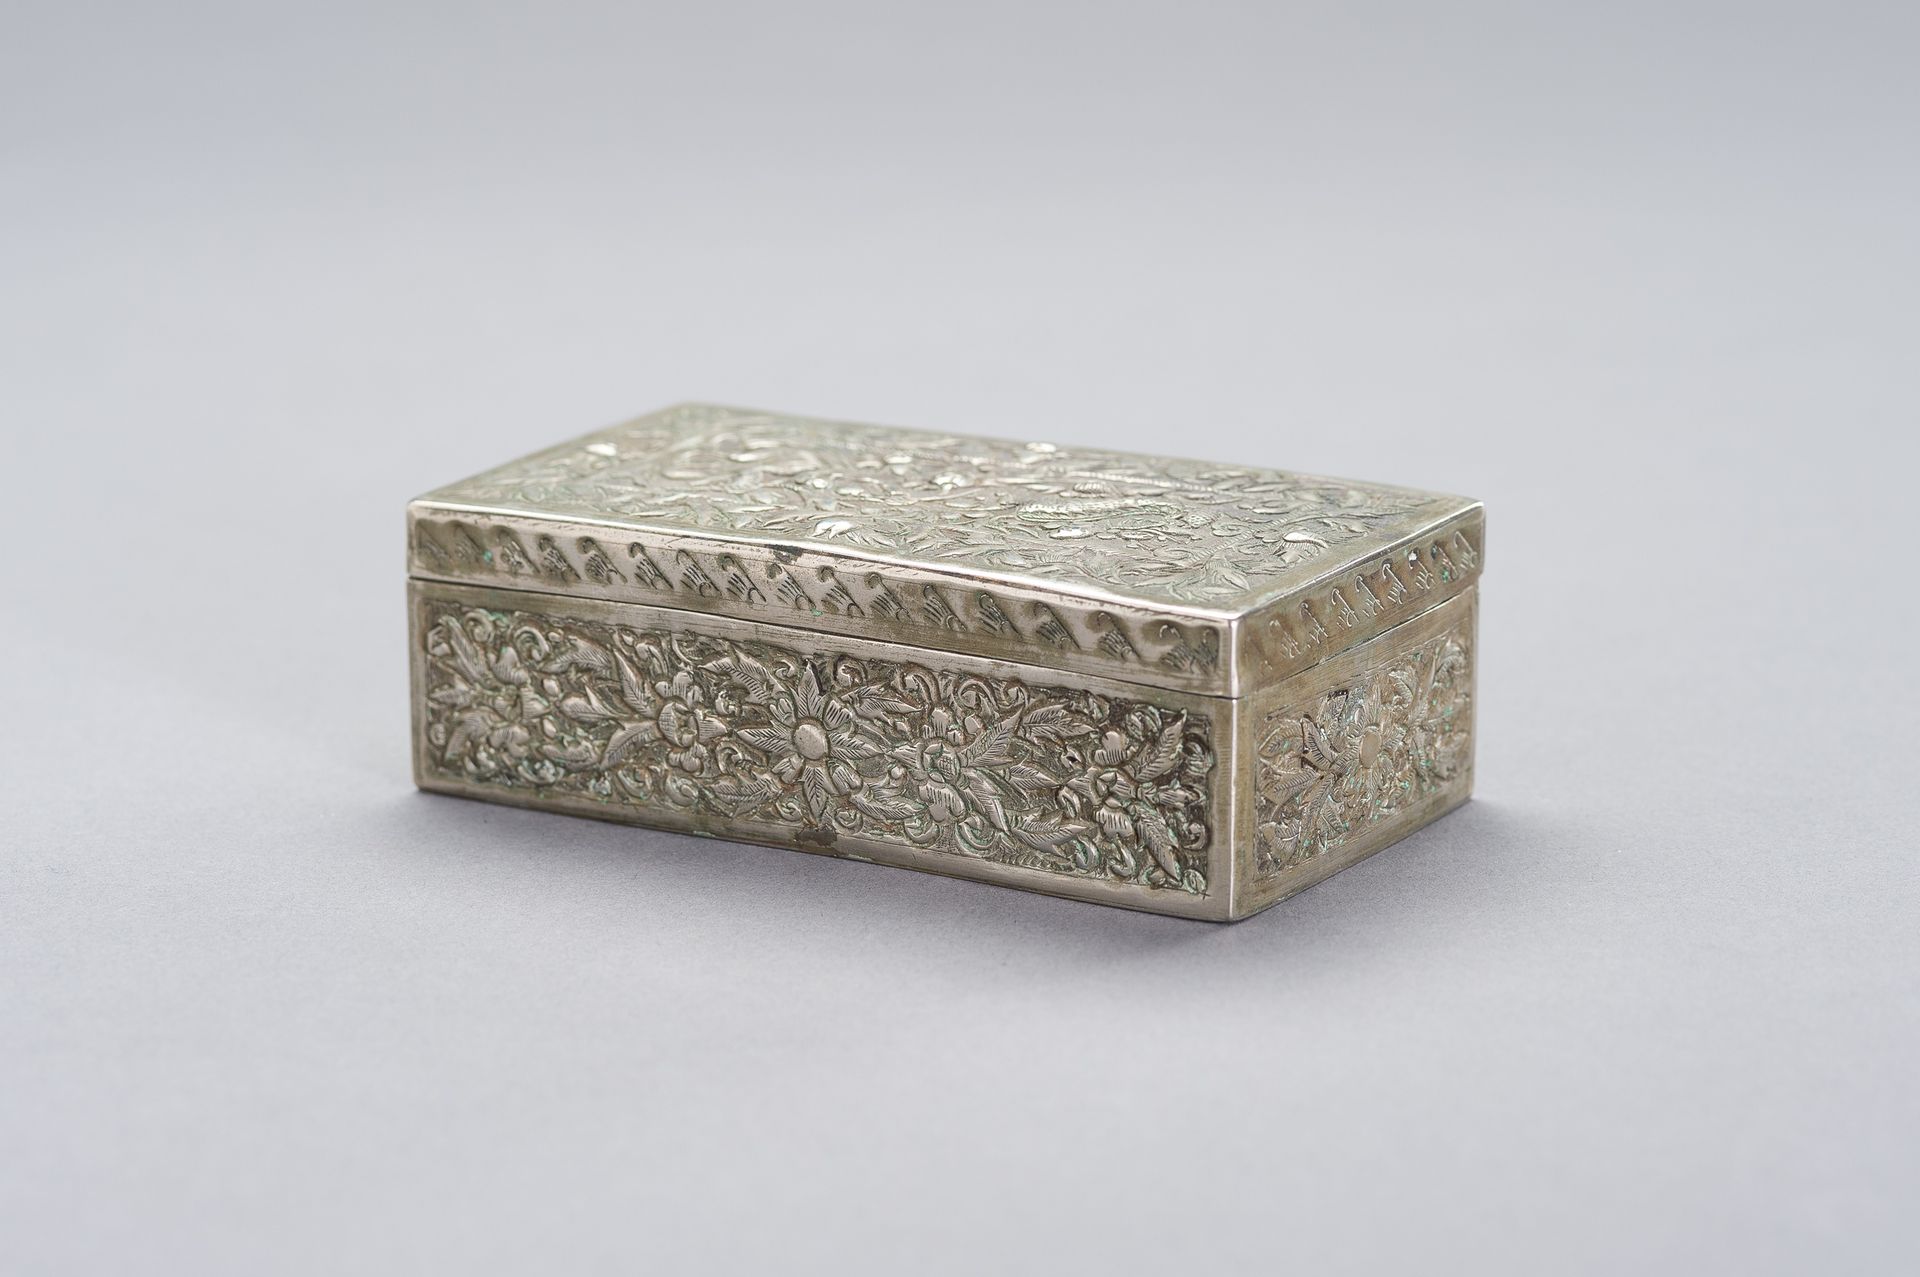 A SILVER-PLATED LIDDED BOX 一个银镀的盖子BOX
缅甸/缅甸约1900年。

状况。状况良好，有预期的表面磨损和一些斑驳。
 出处。Z&hellip;